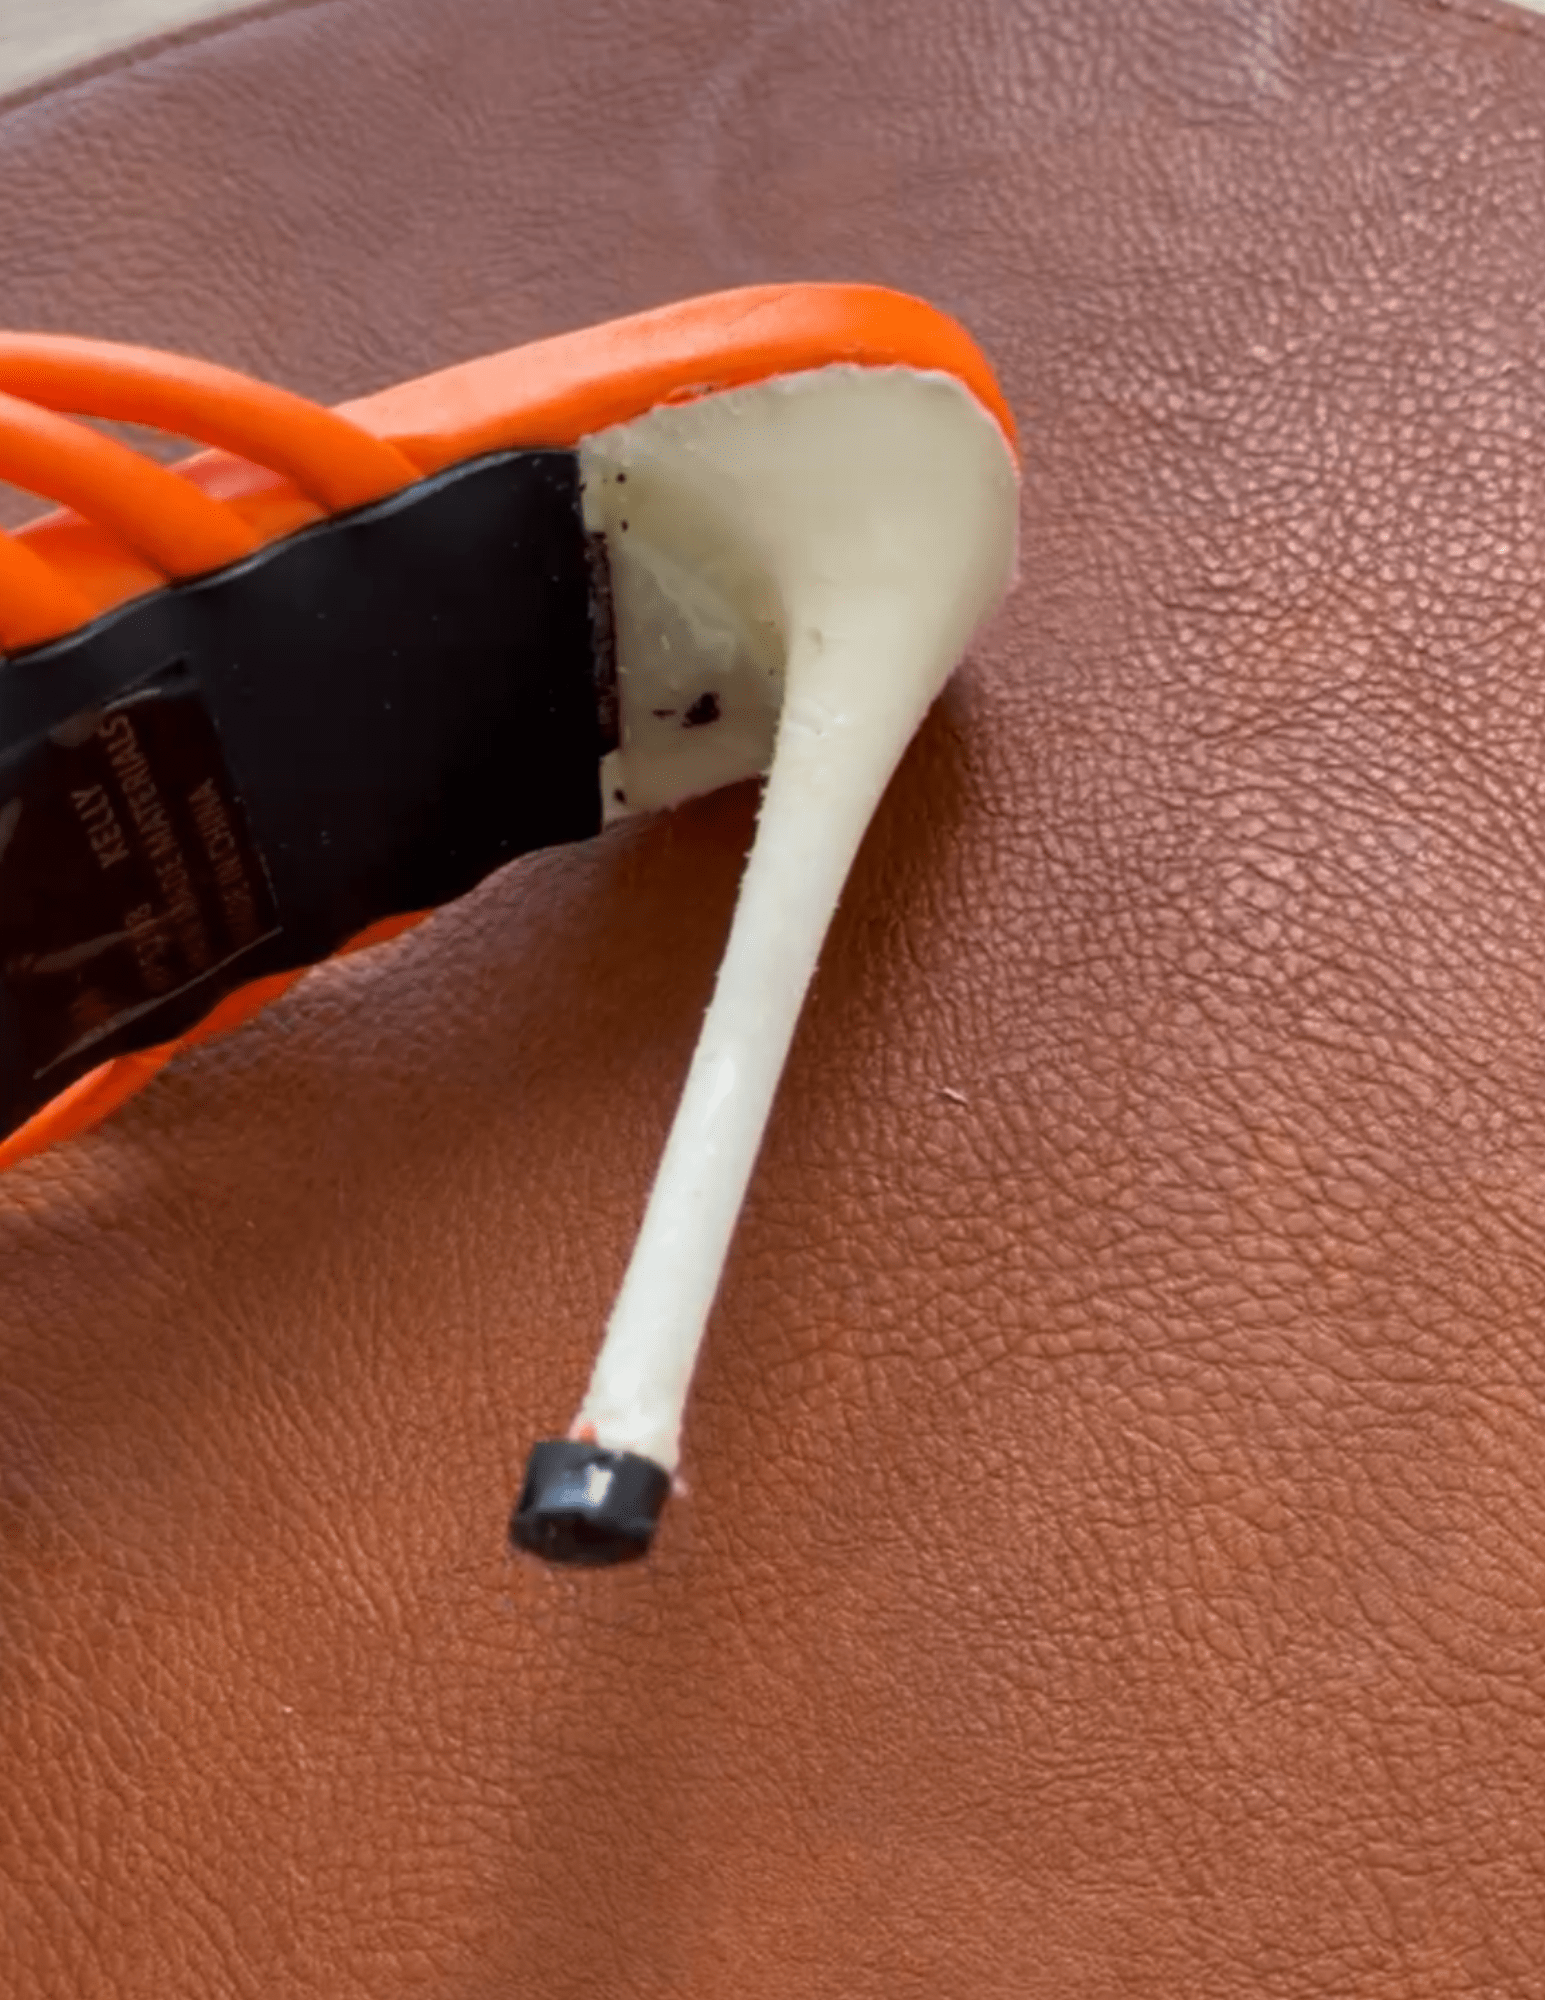 Uncovered stiletto heel on tan mat